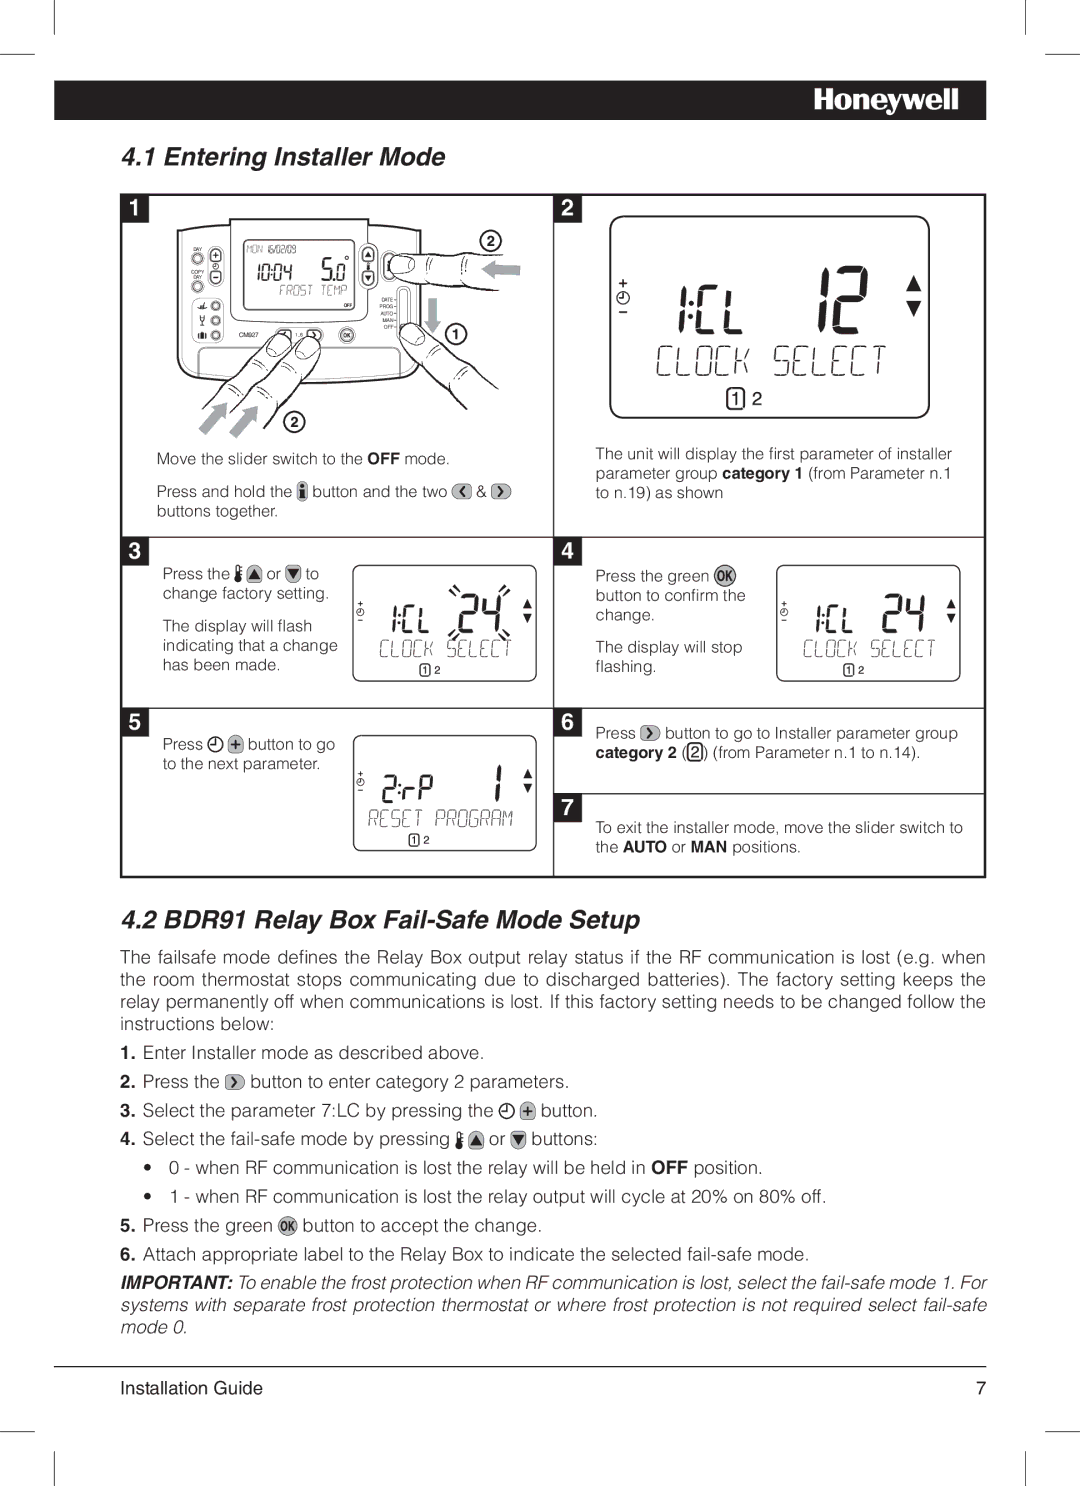 Honeywell CM900 manual Entering Installer Mode, BDR91 Relay Box Fail-Safe Mode Setup 